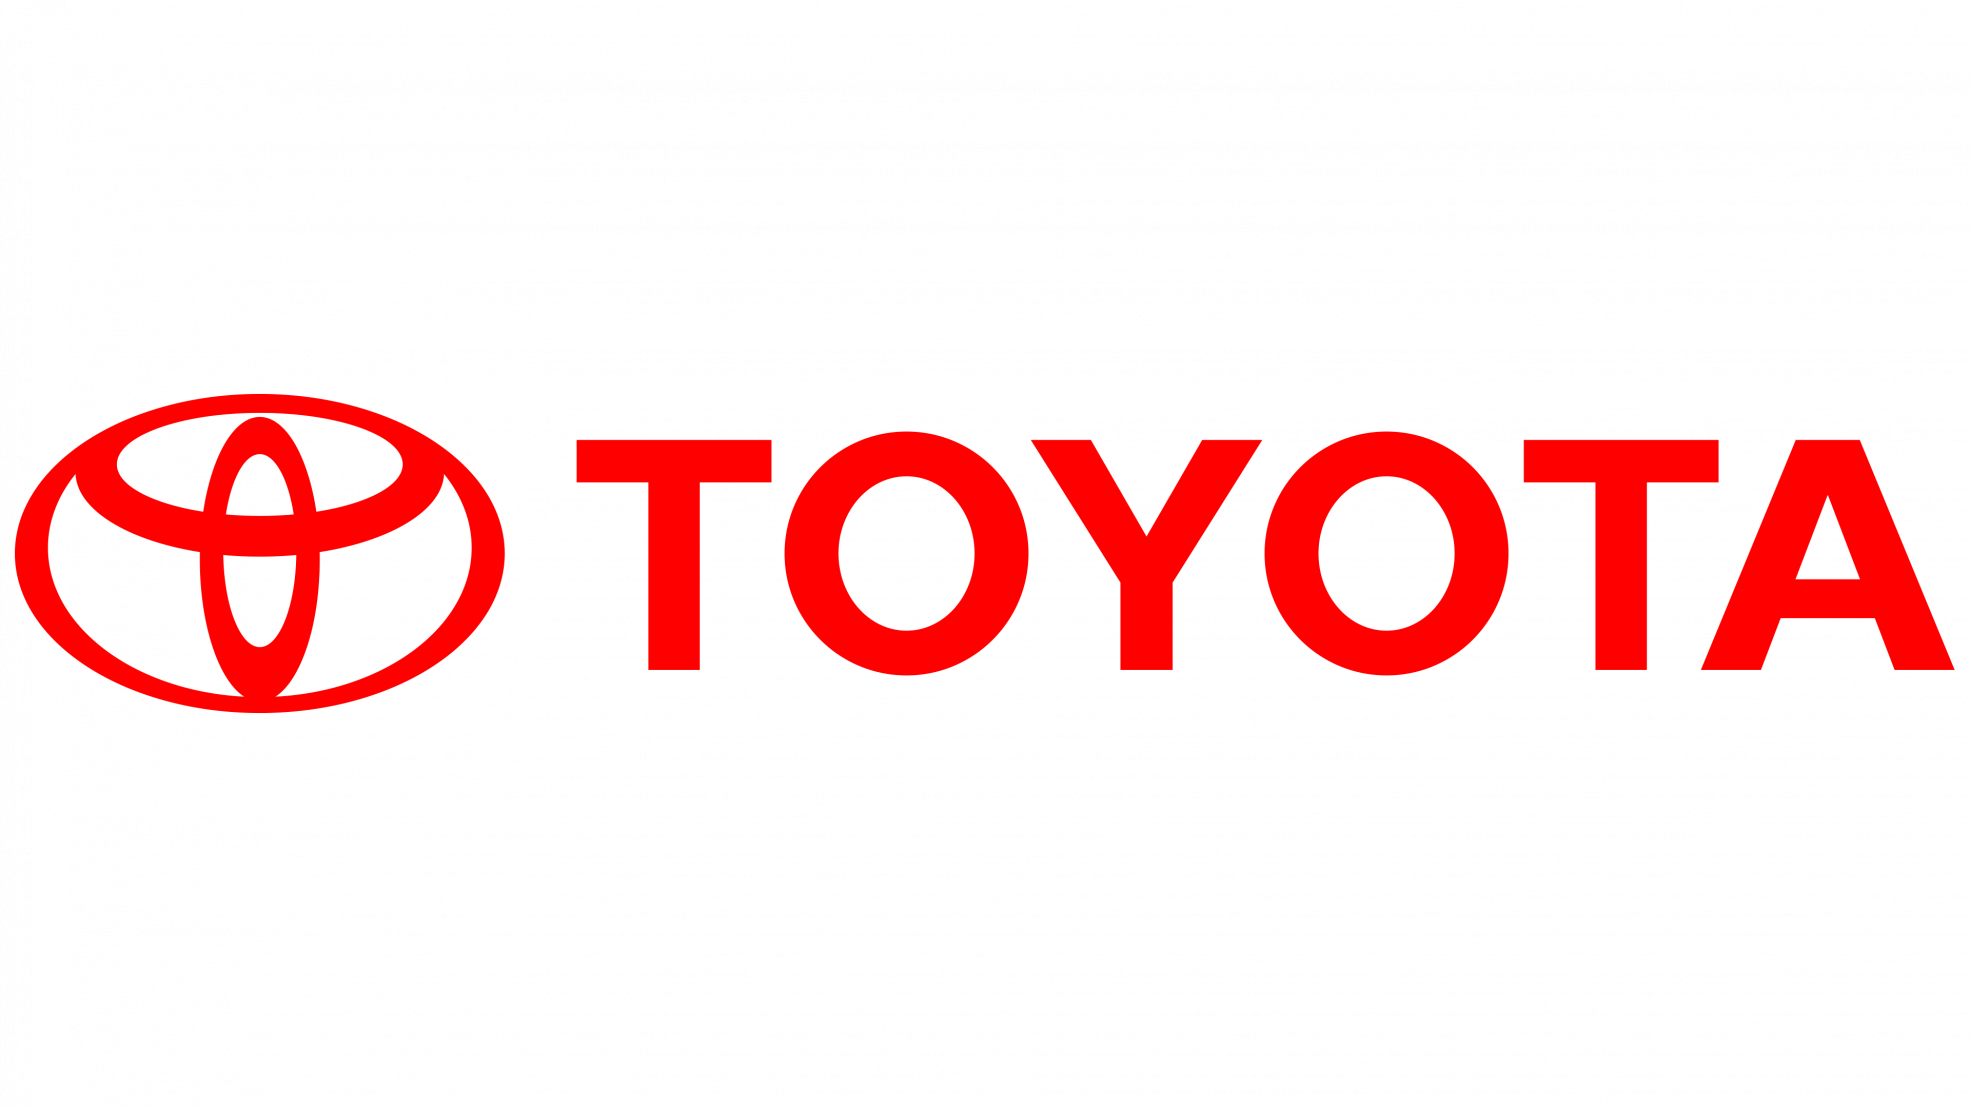 //daihoangvu.com/files/images/Toyota-Logo.png